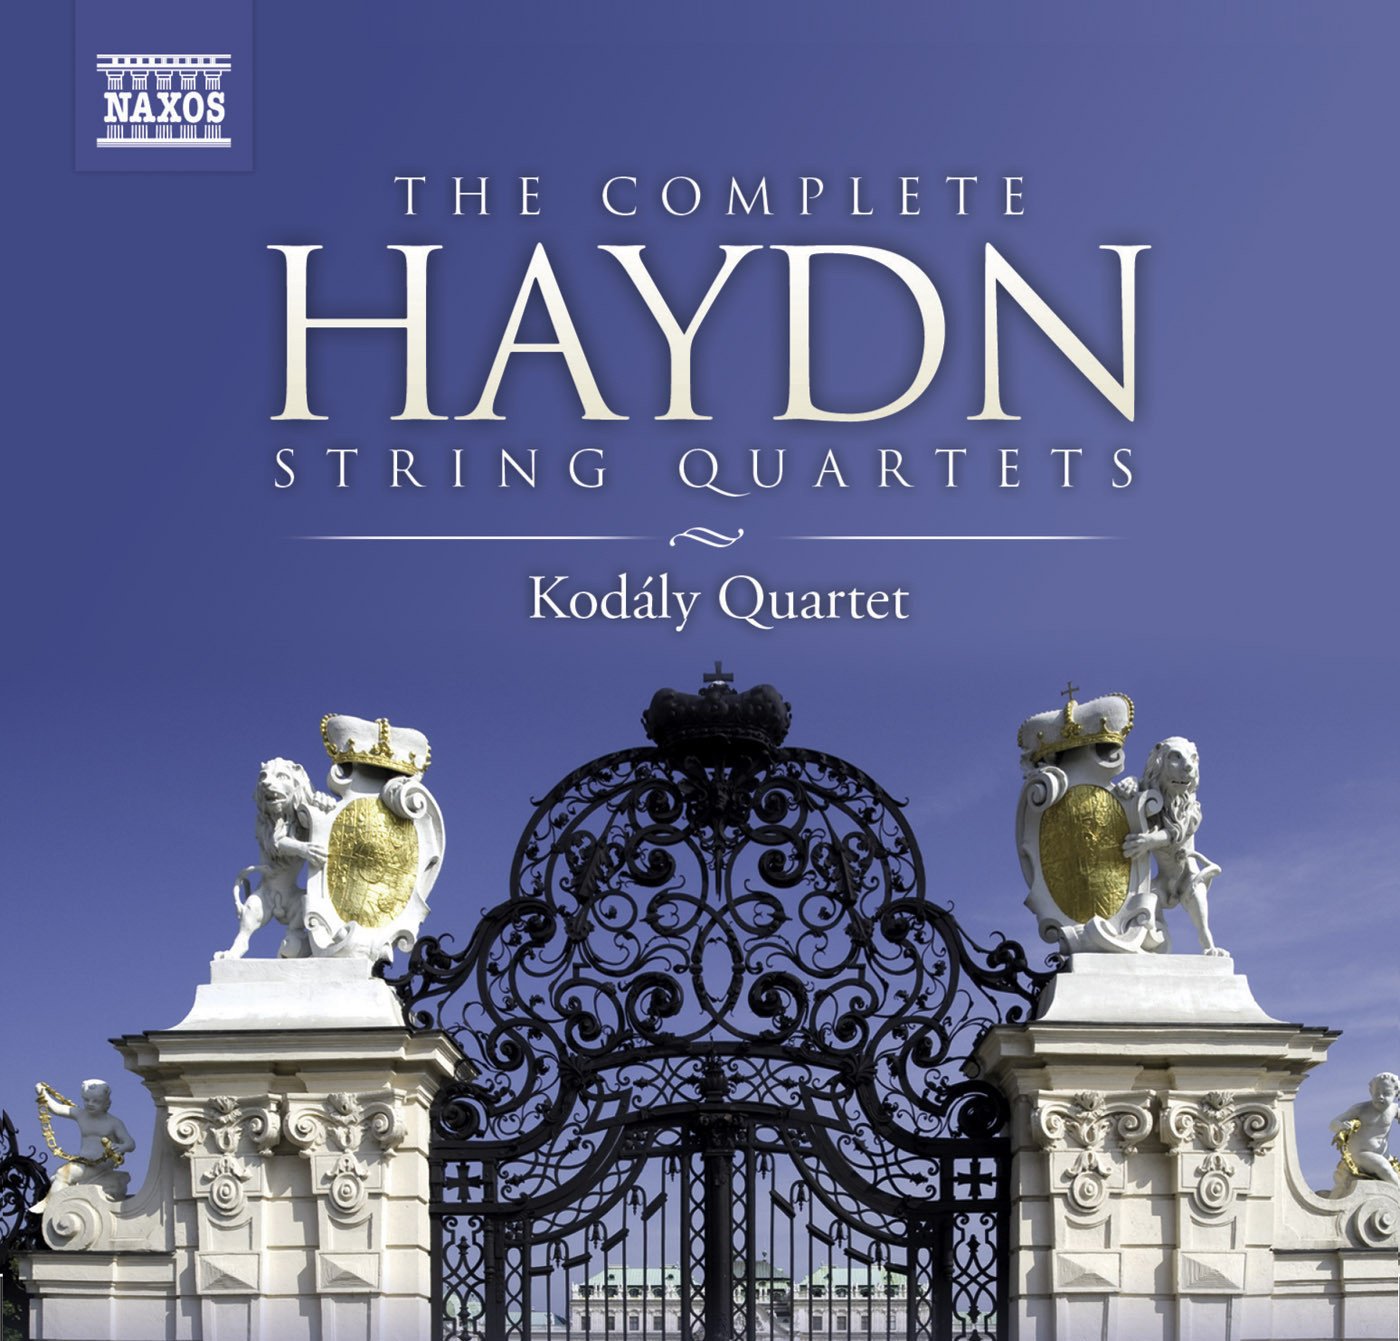 HAYDN: String Quartets (Complete) - Kodaly Quartet (25 CD Box set)